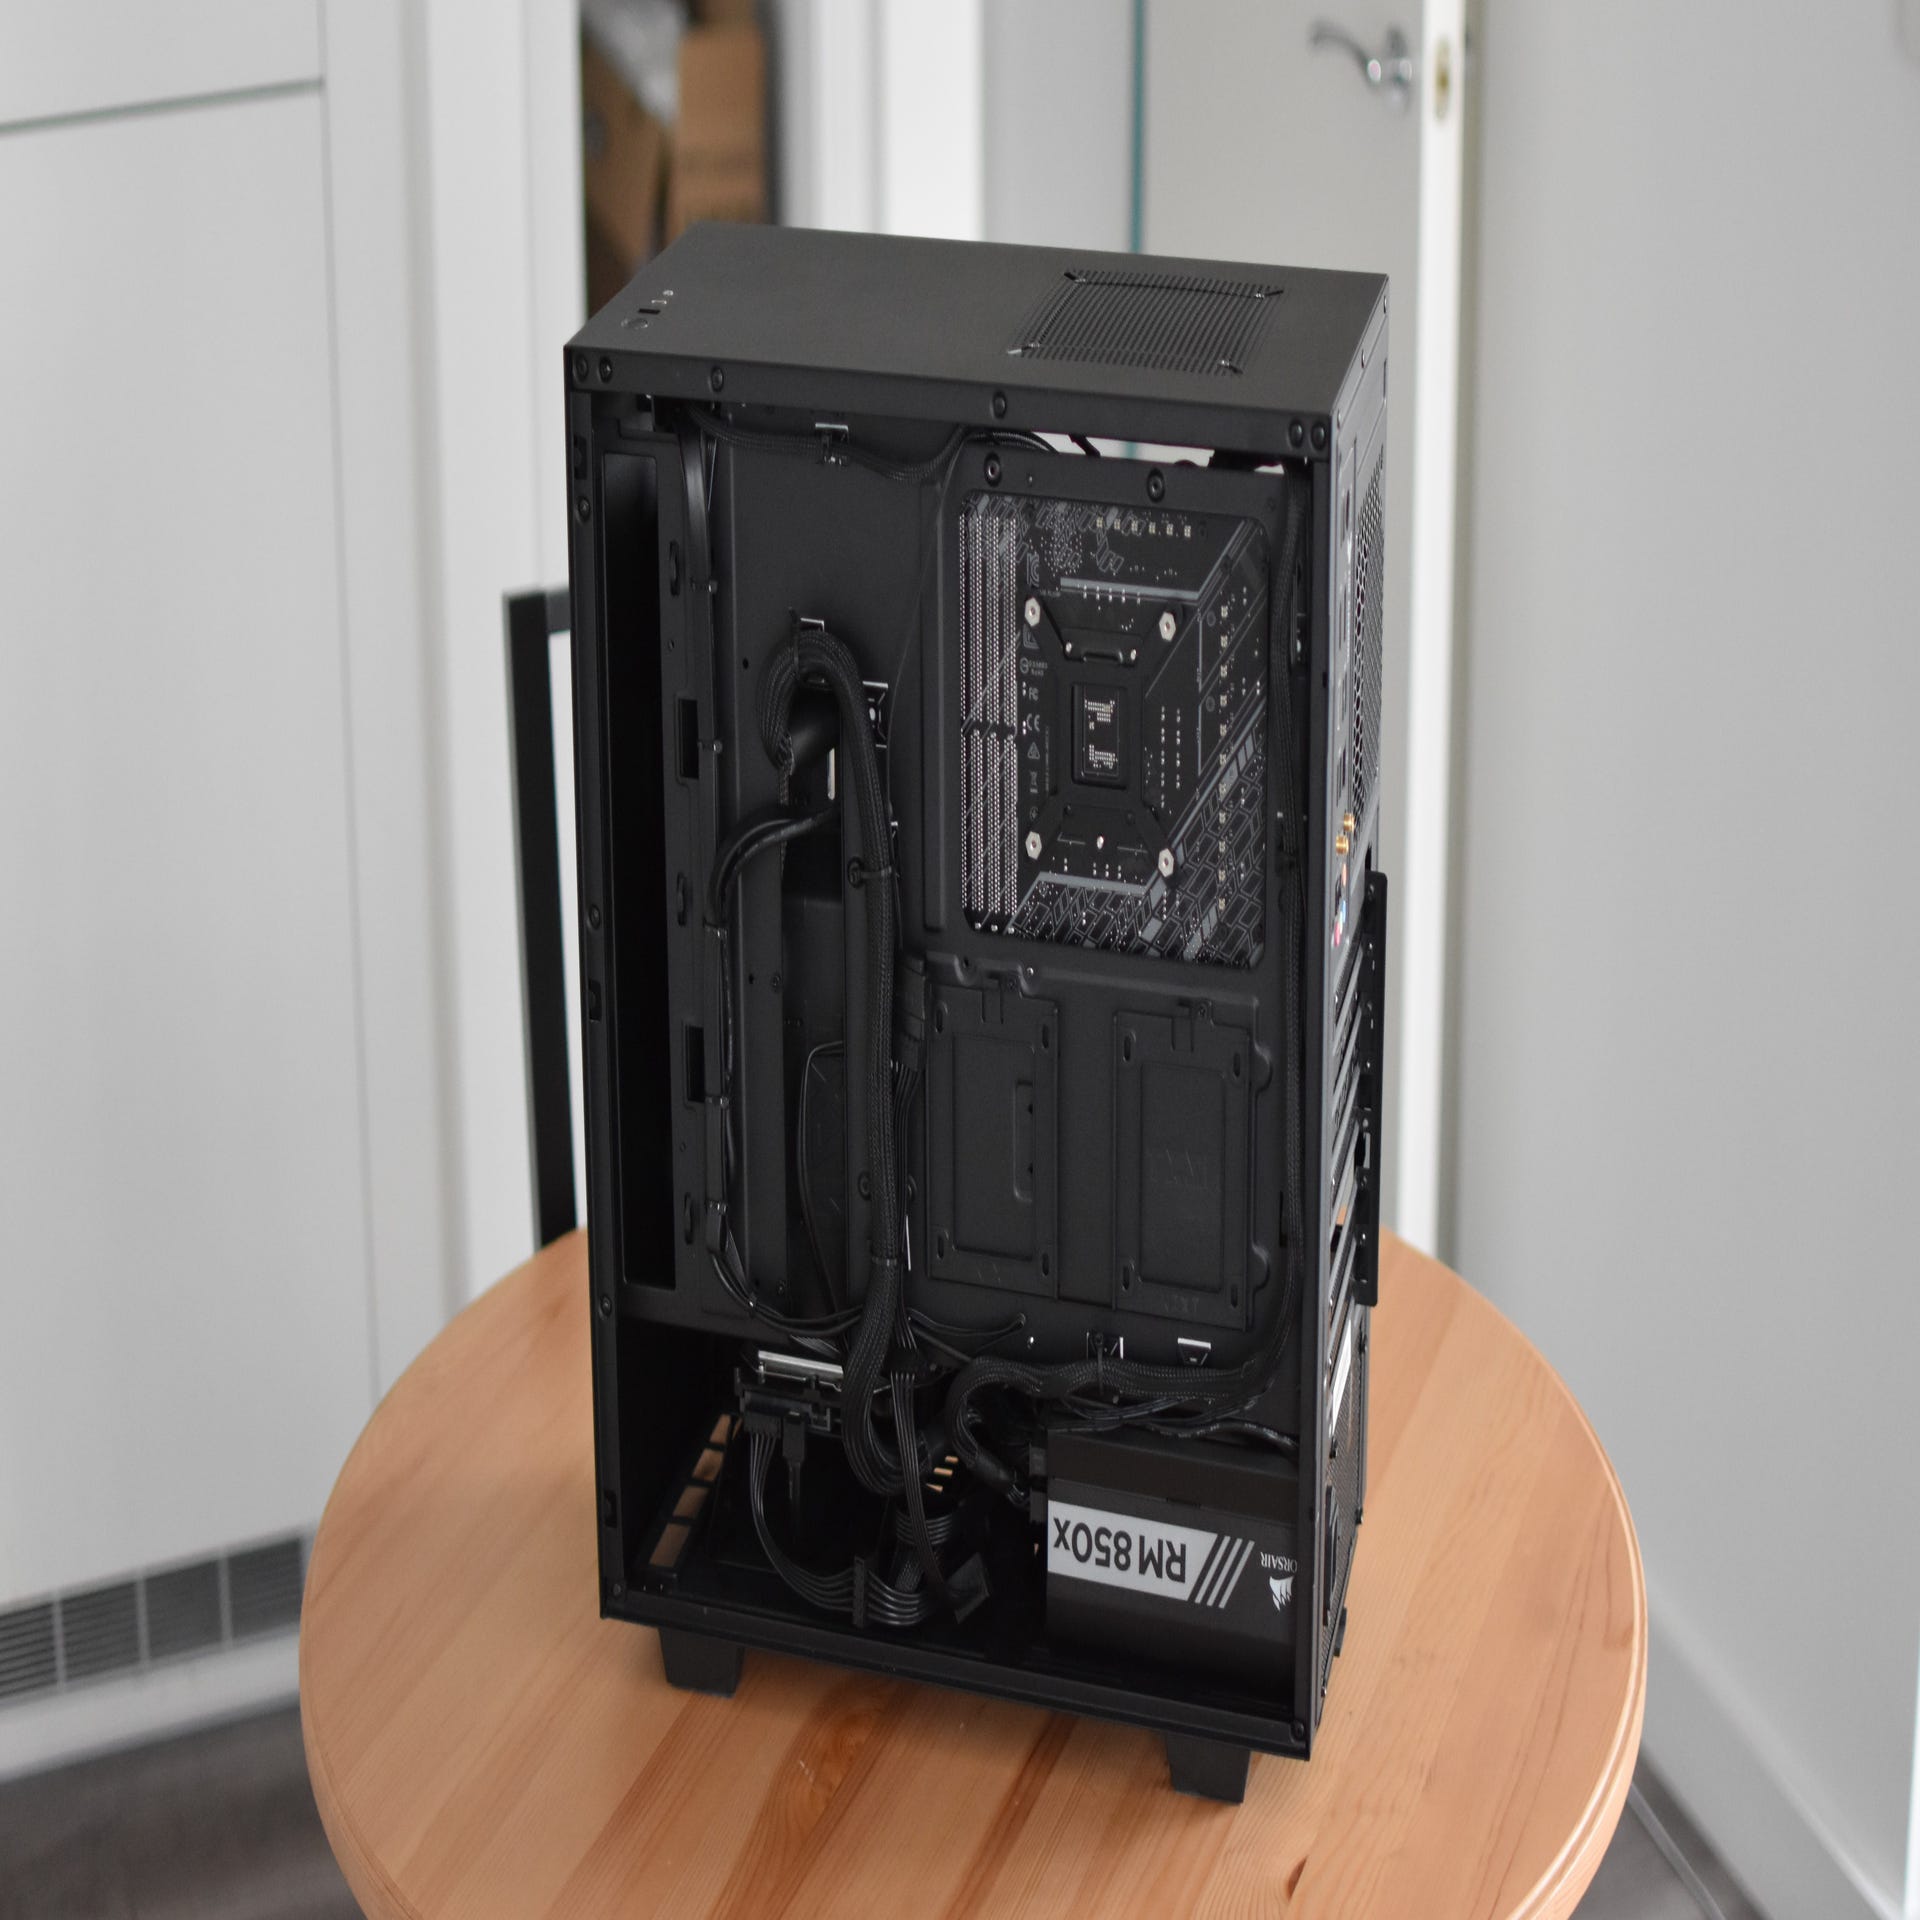 inside computer case